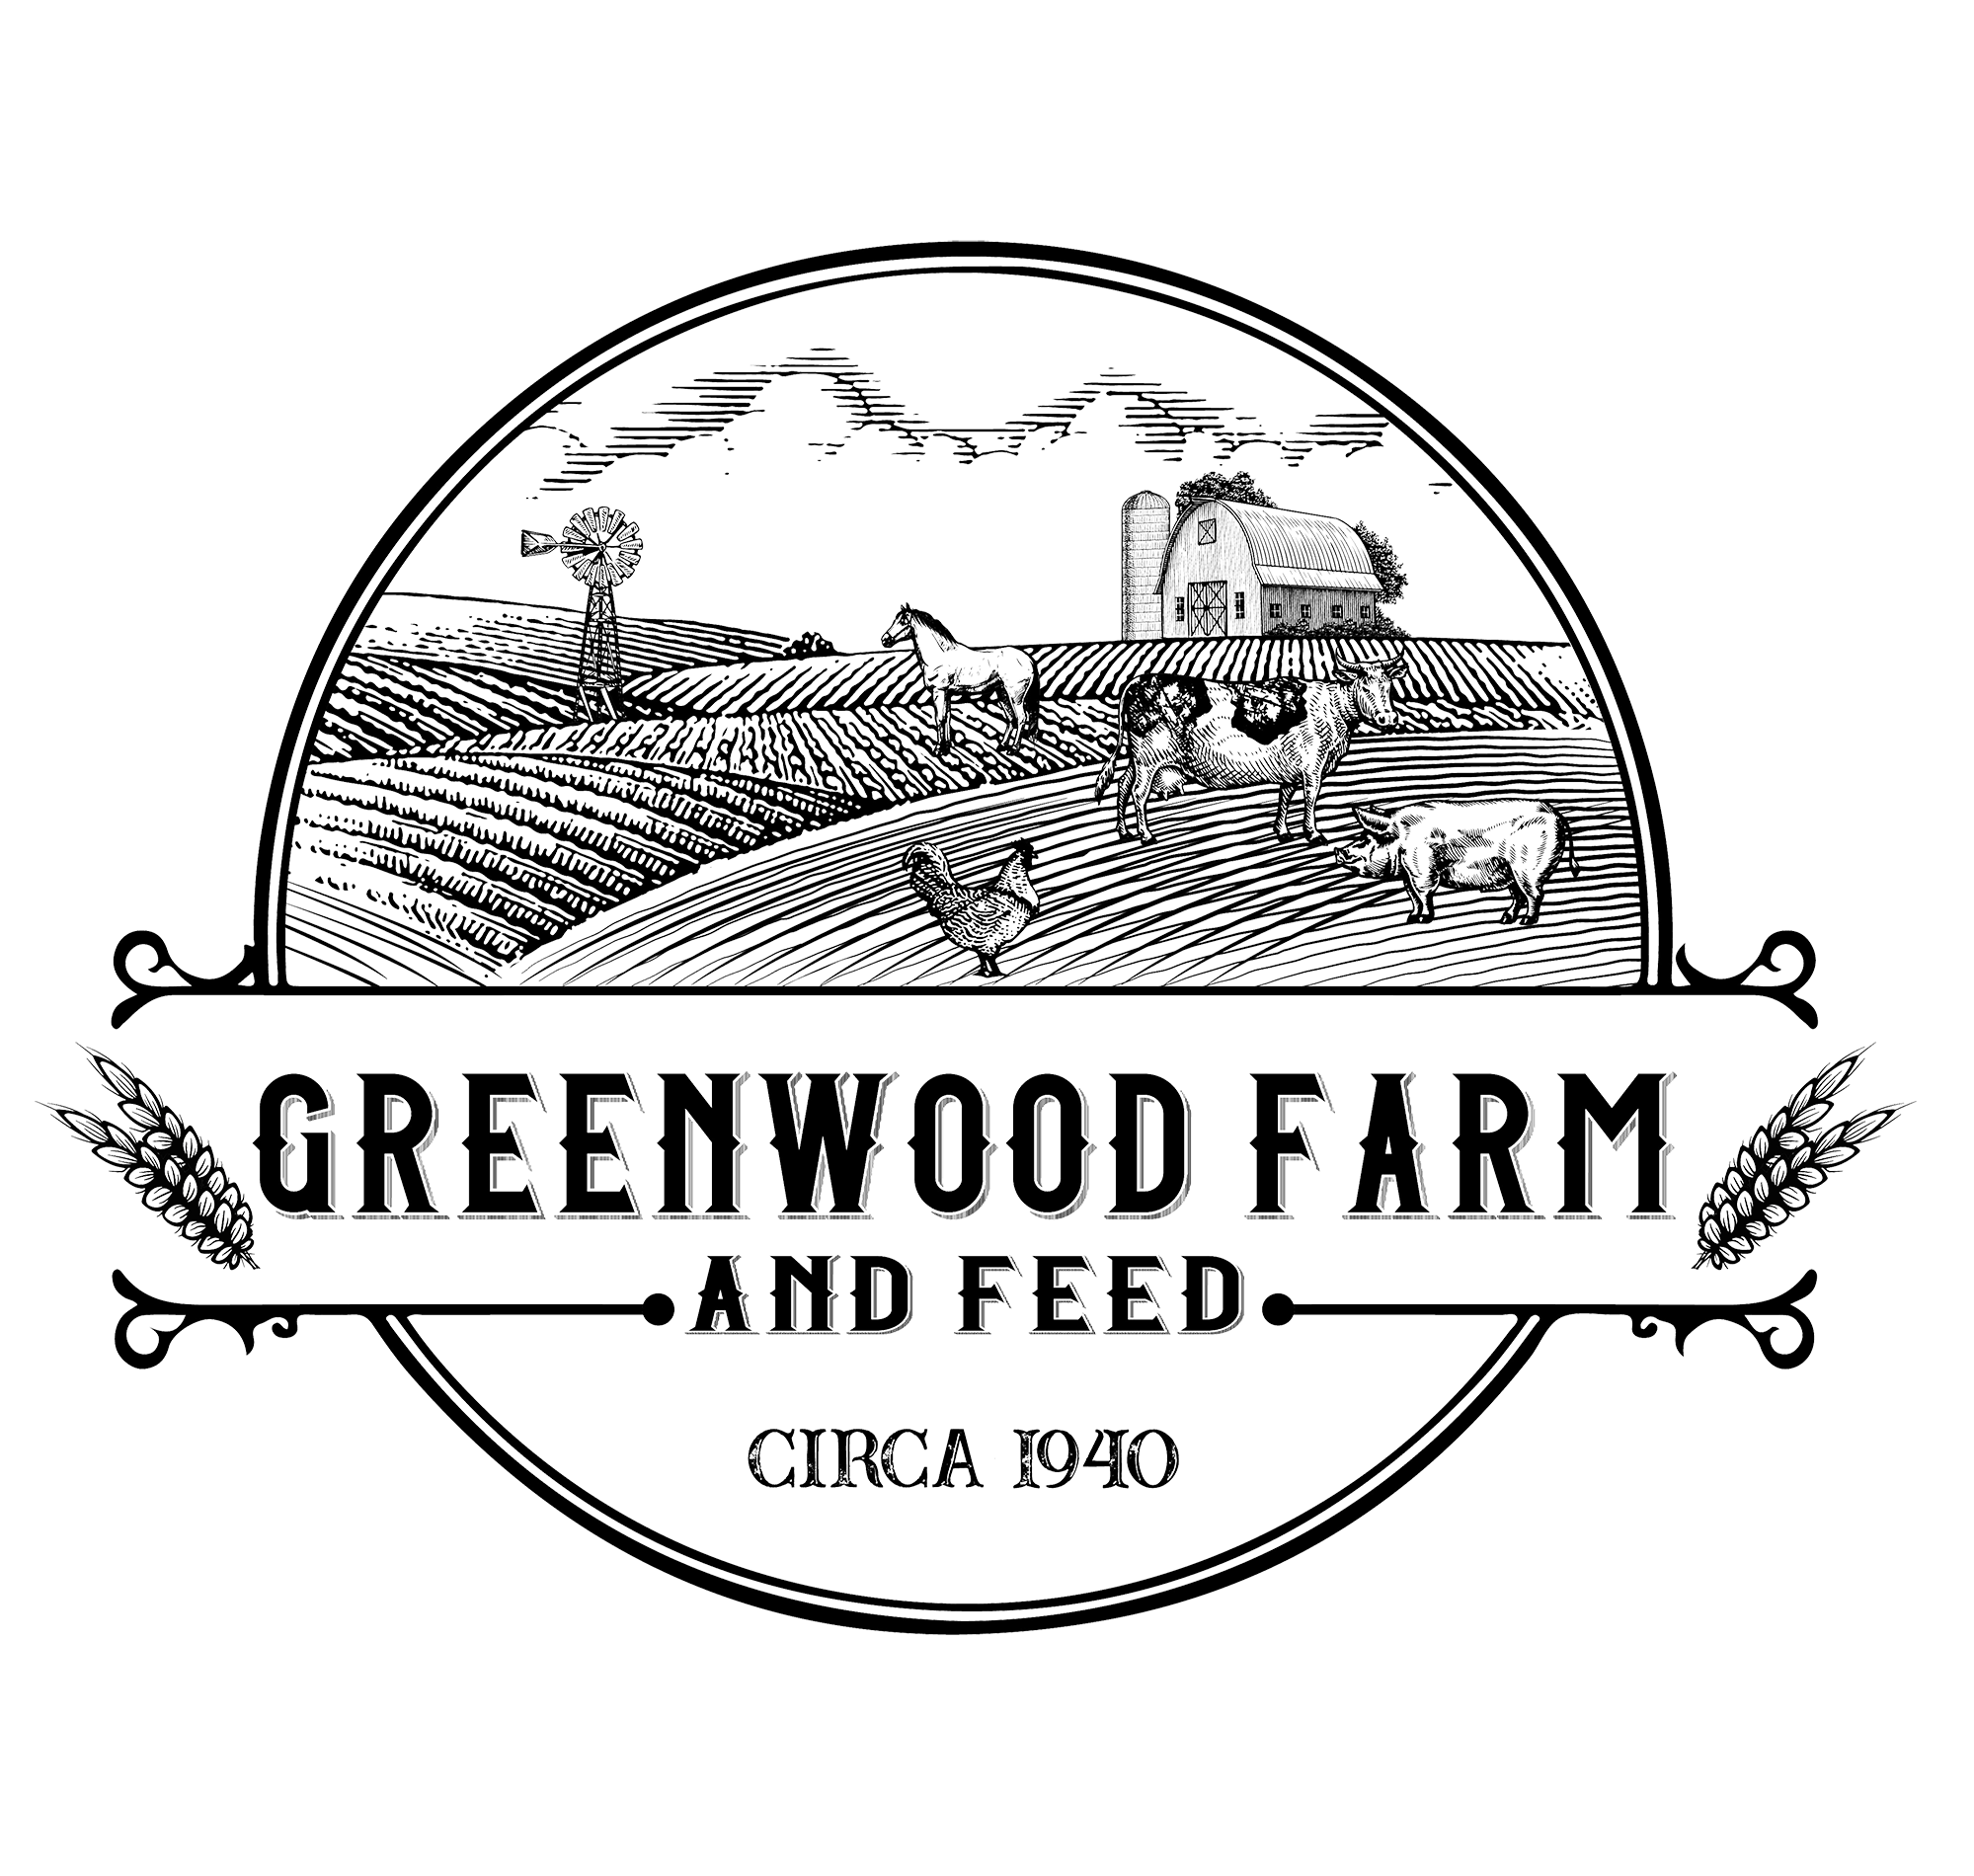 Greenwood Farm and Feed Logo